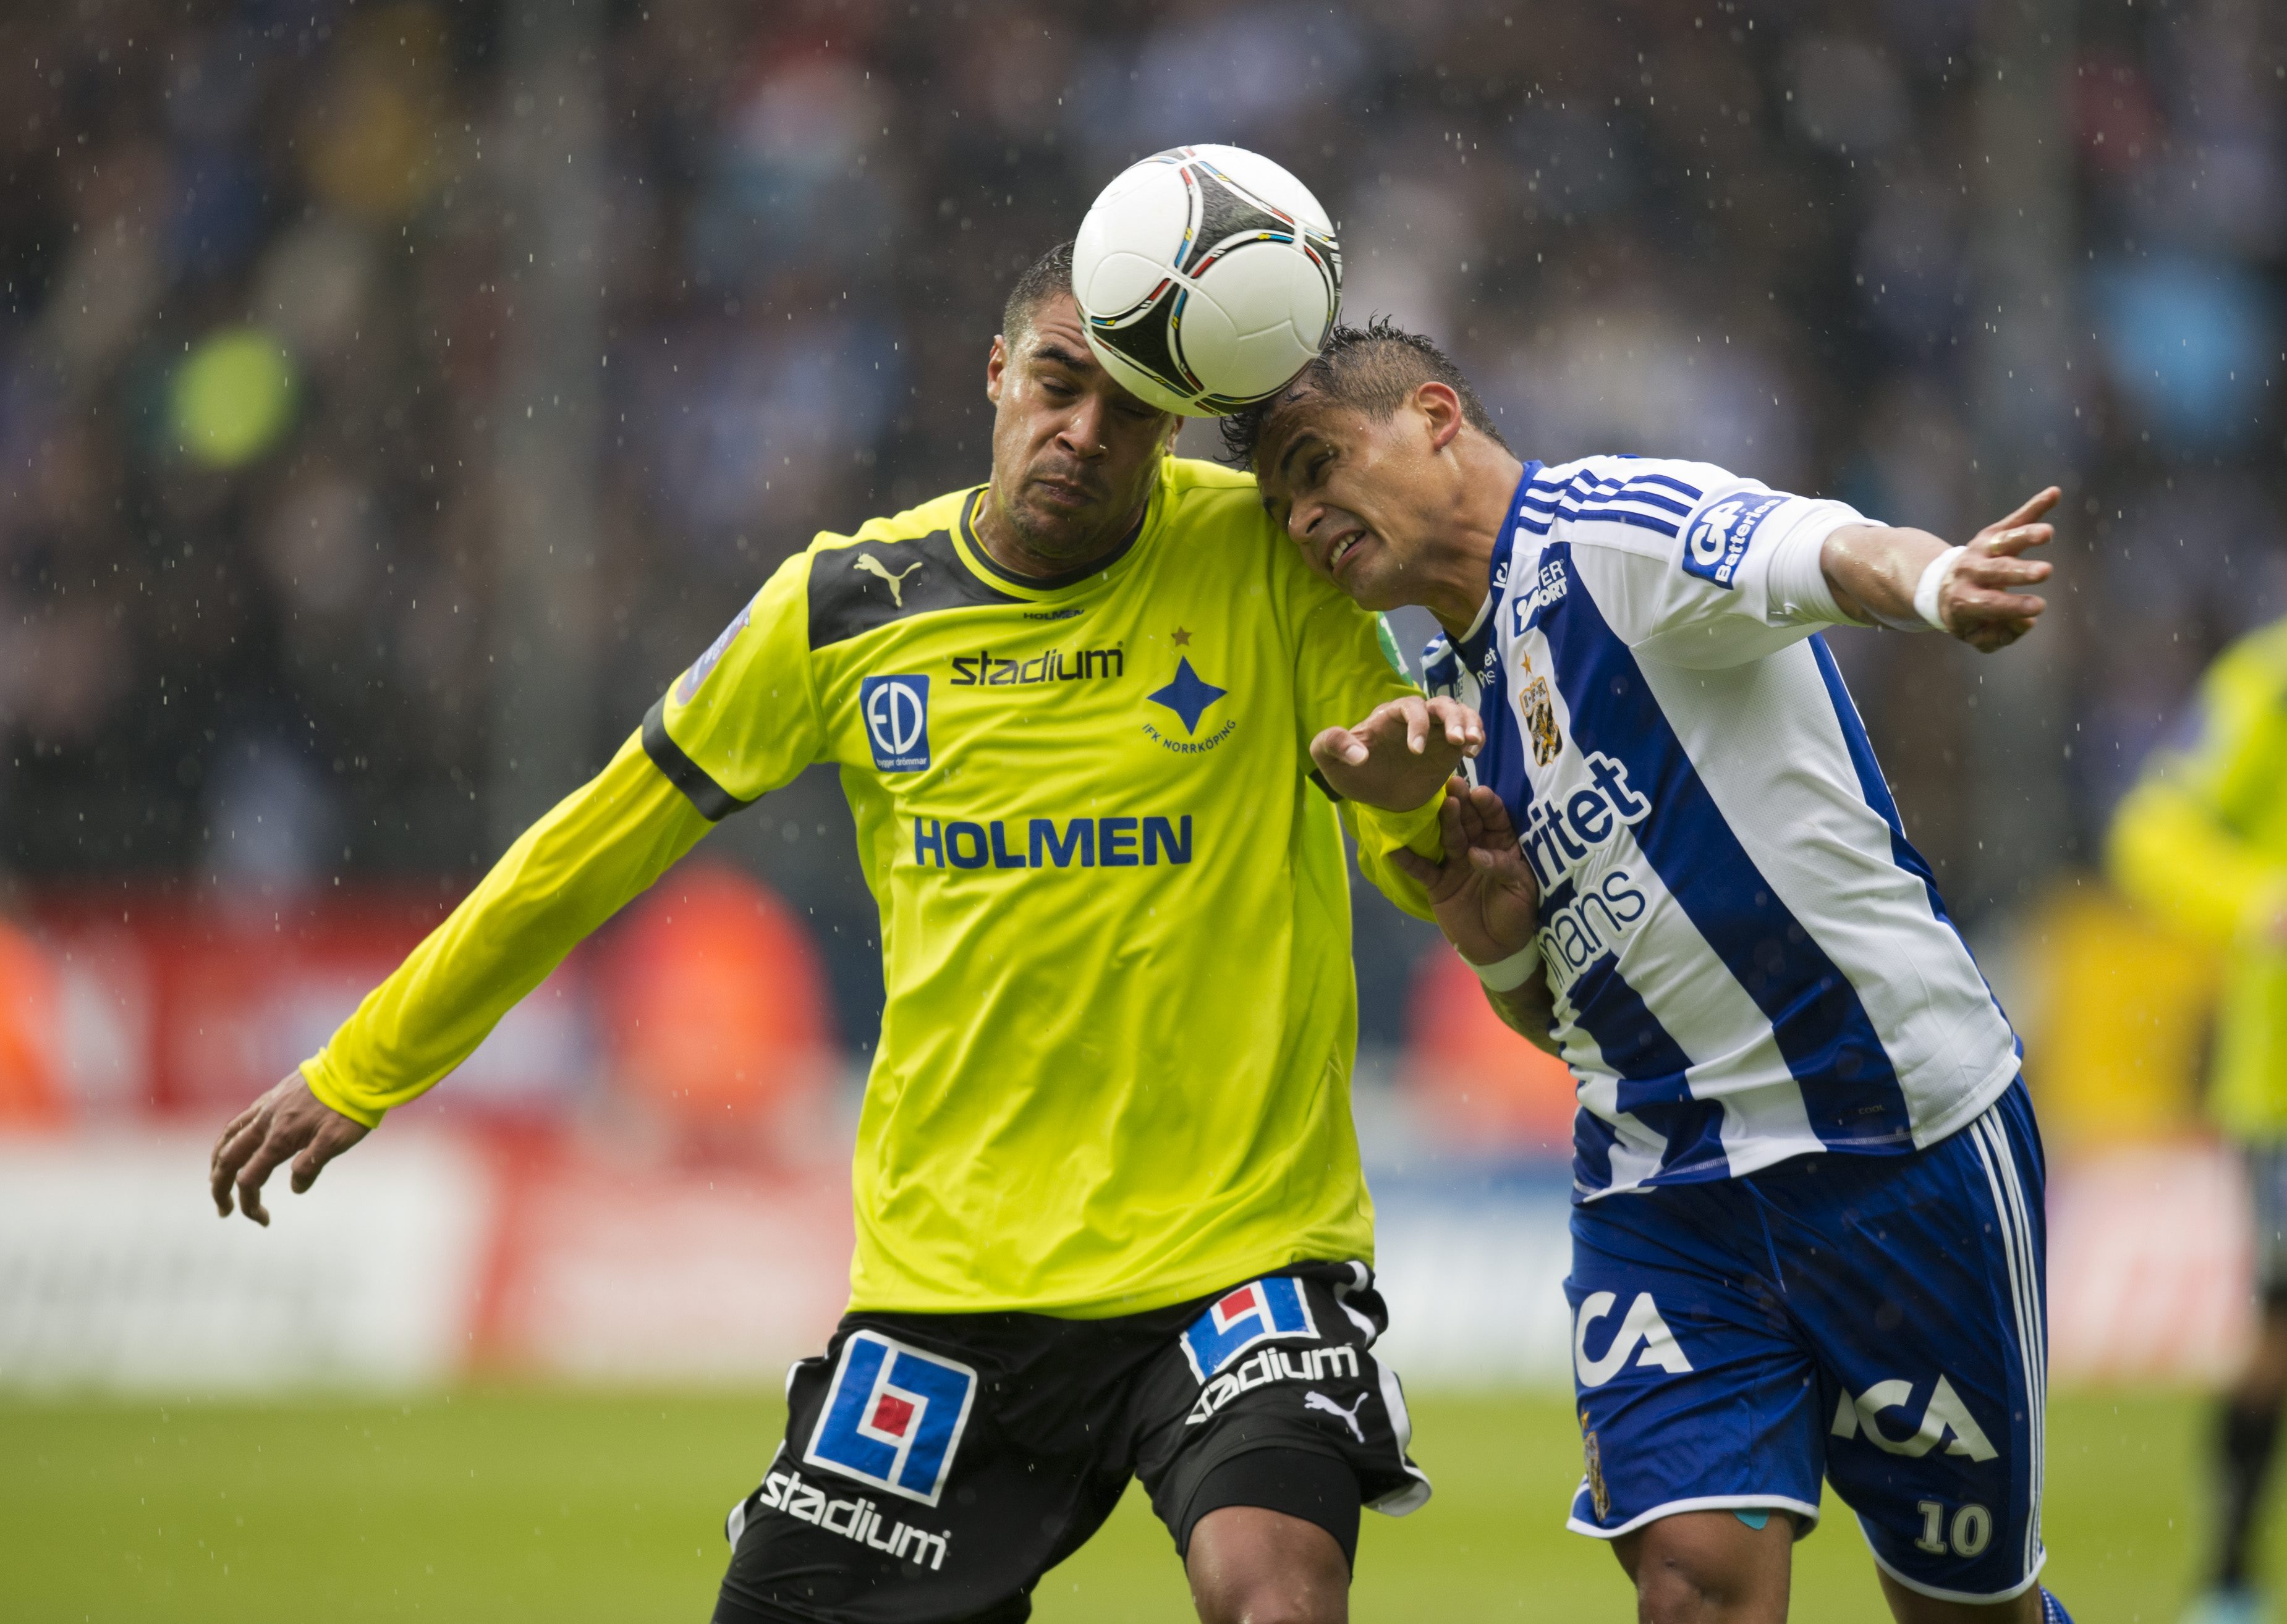 IFK Göteborgs brasse Daniel Sobralense i duell med Norrköpingsbacken Bobbie Friberg da Cruz.